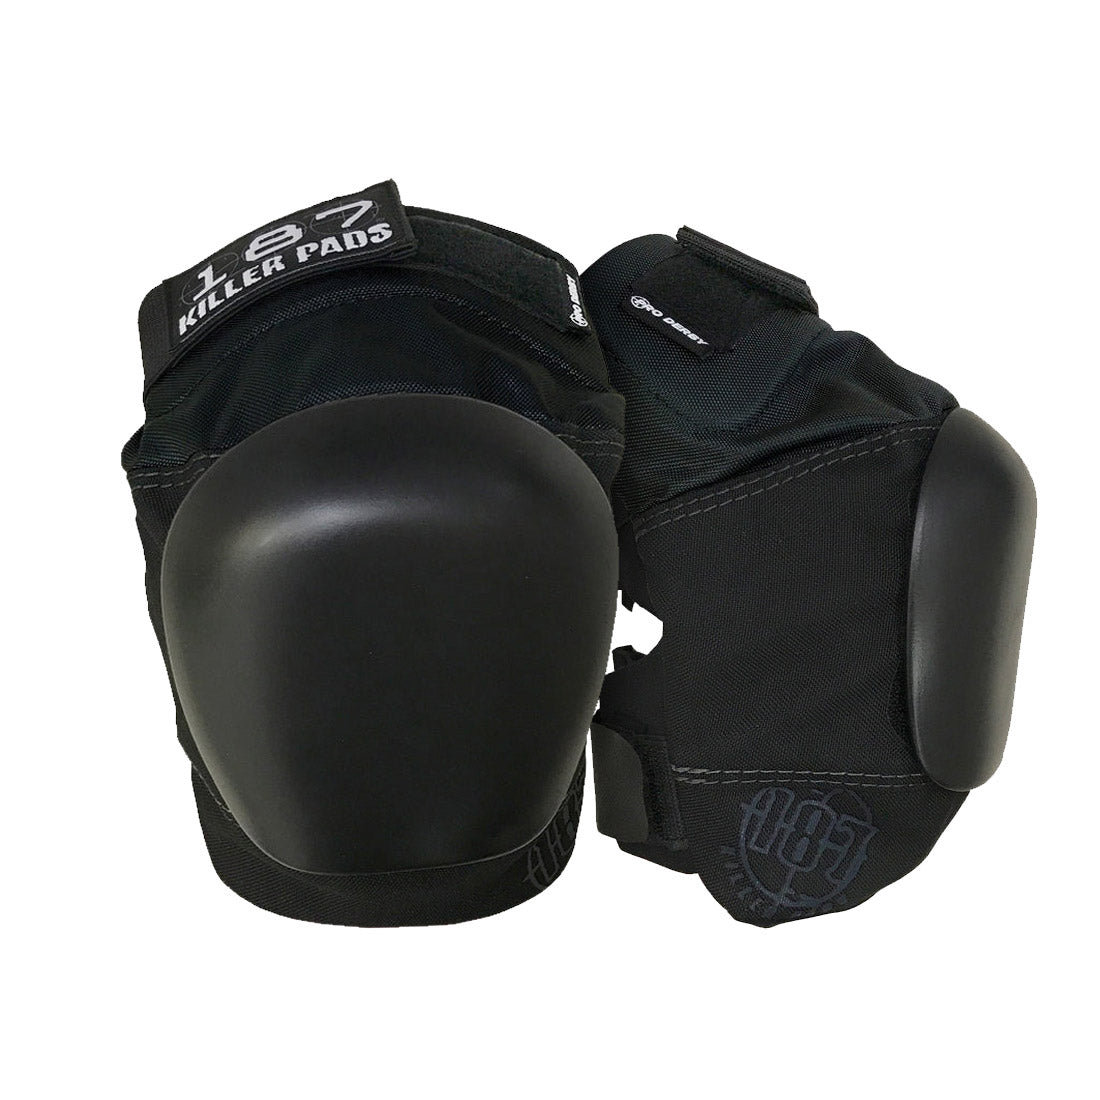 187 Pro Derby Knee - Black Protective Gear